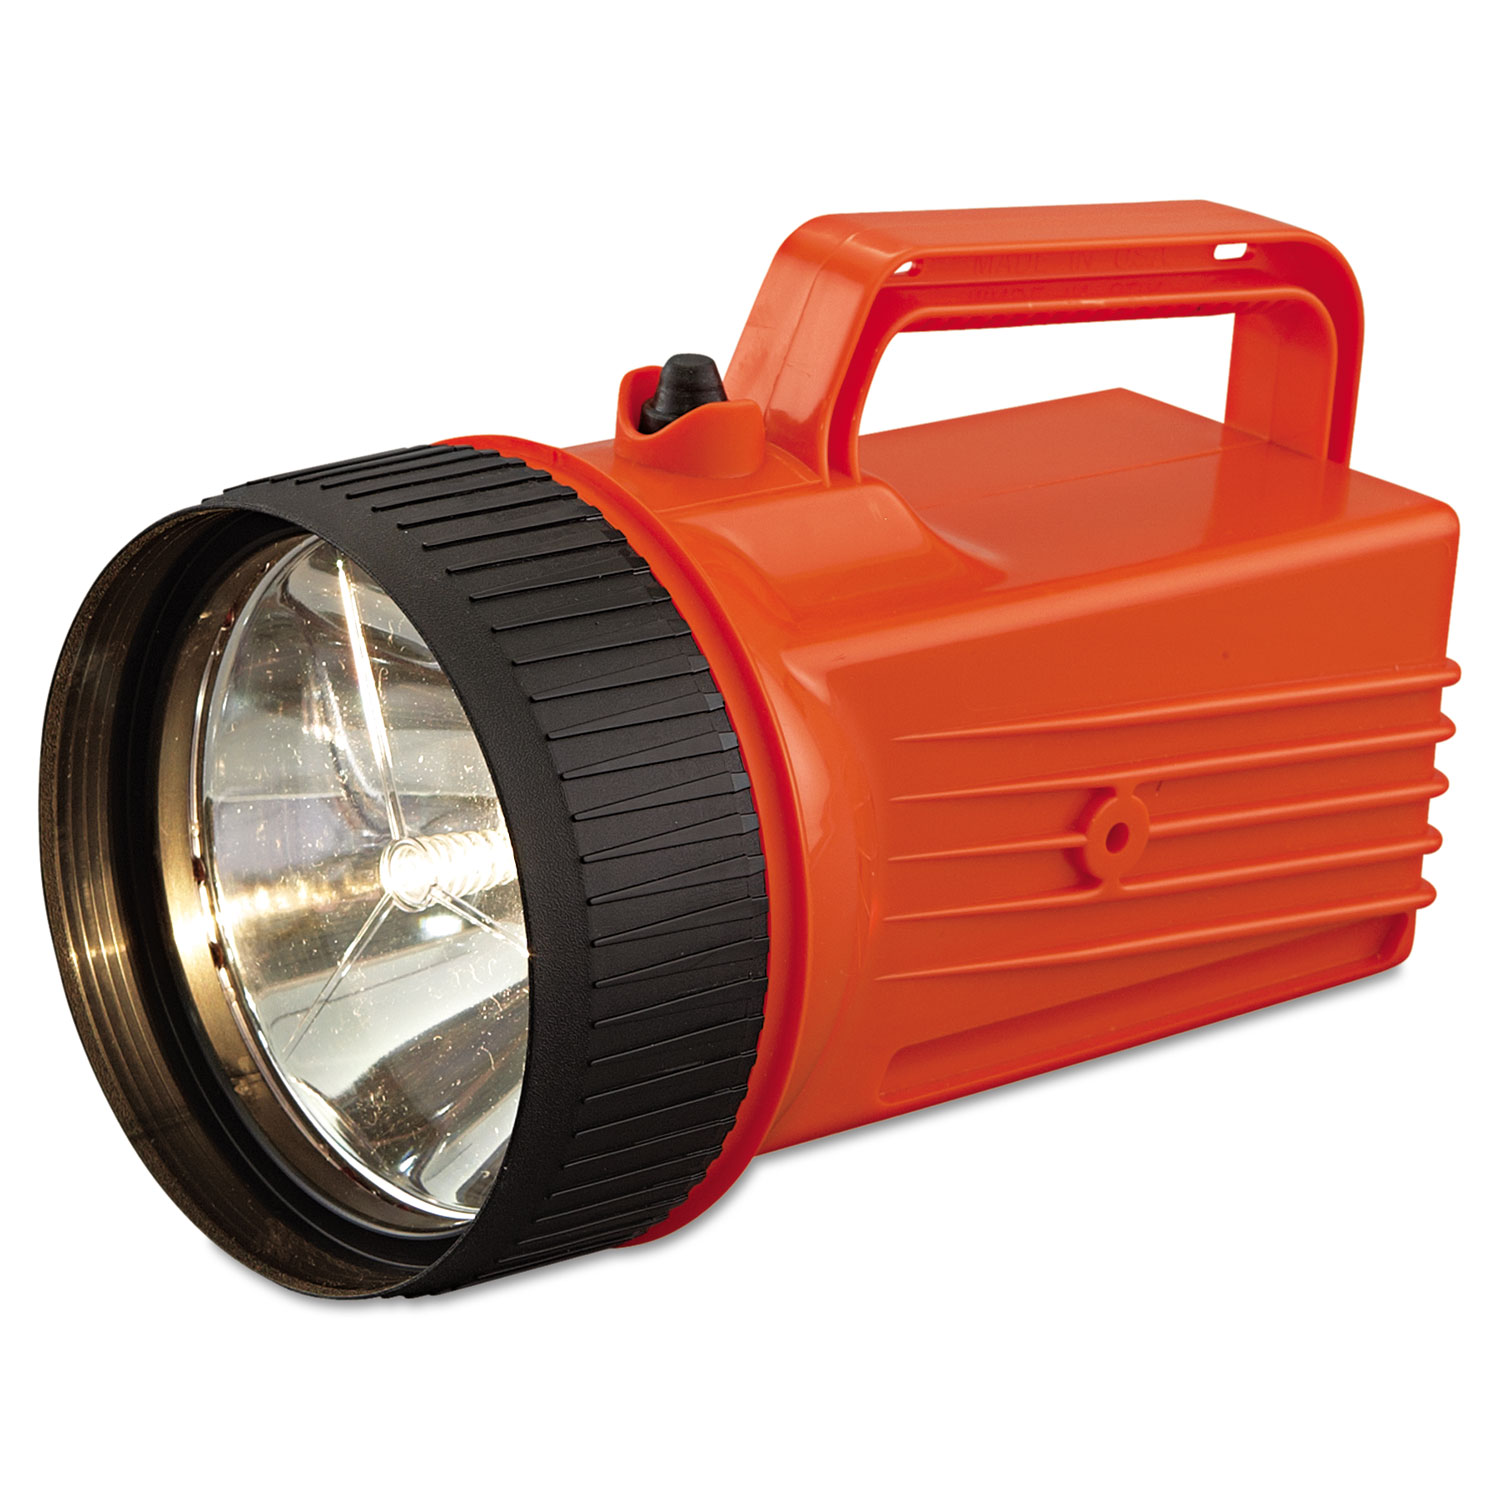 WorkSAFE Waterproof Lantern, Orange/Black